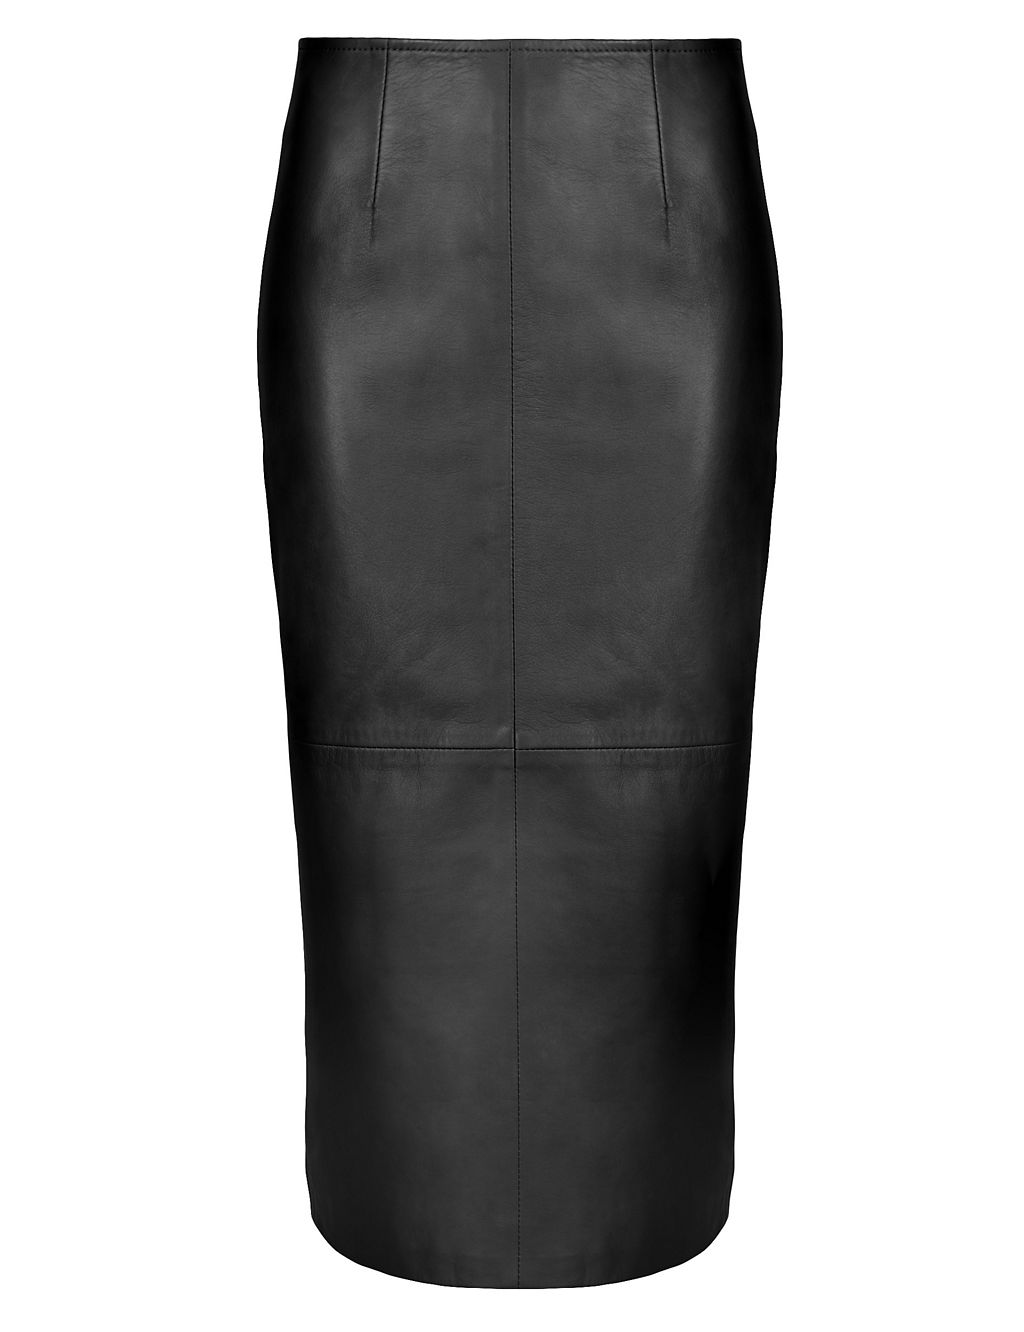 Luxury Leather Long Pencil Skirt | Autograph | M&S